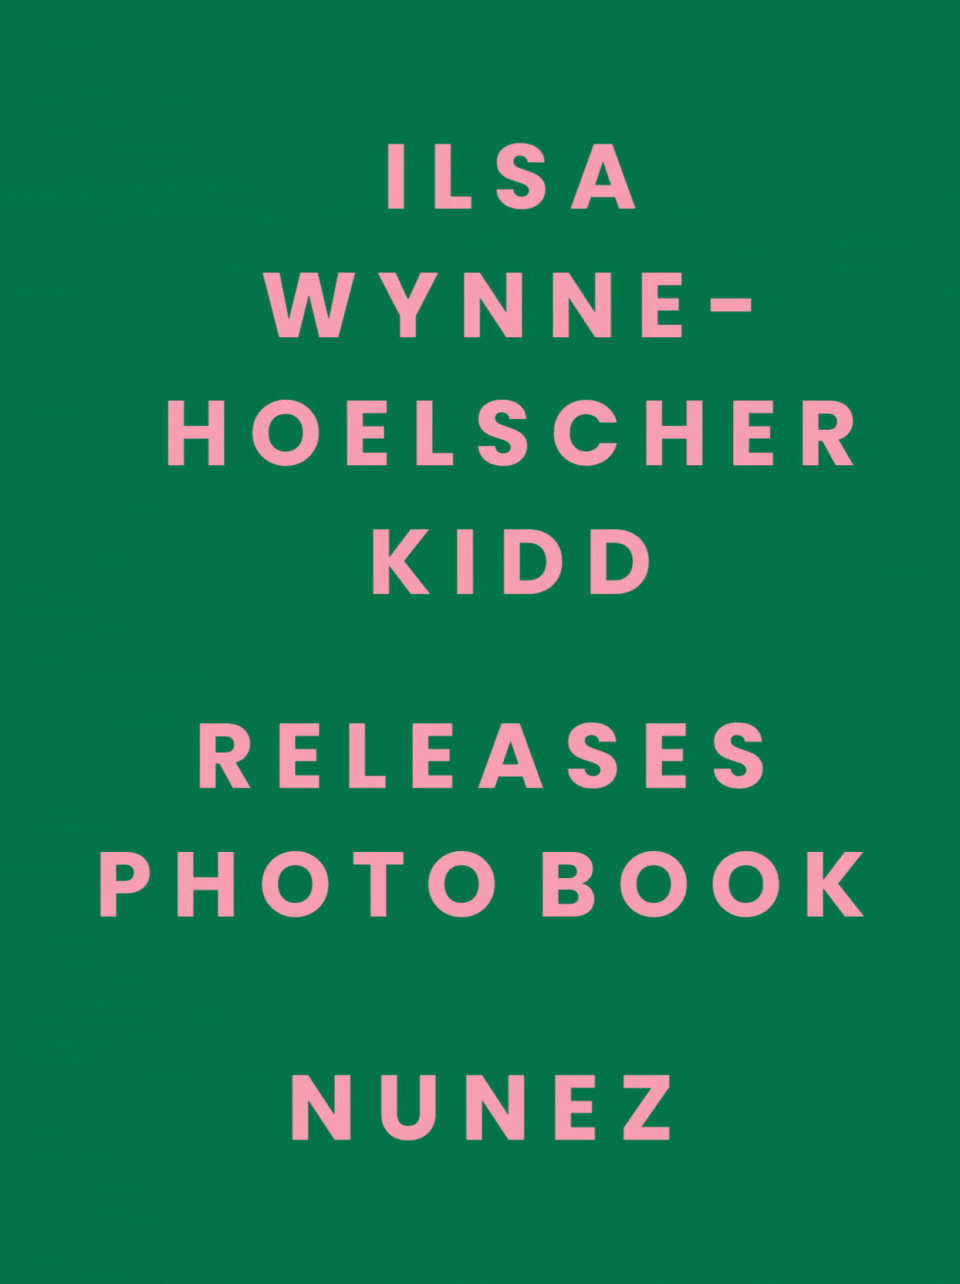 NUNEZ photo book by Ilsa Wynne-Hoelscher Kidd and Nunez Rojas